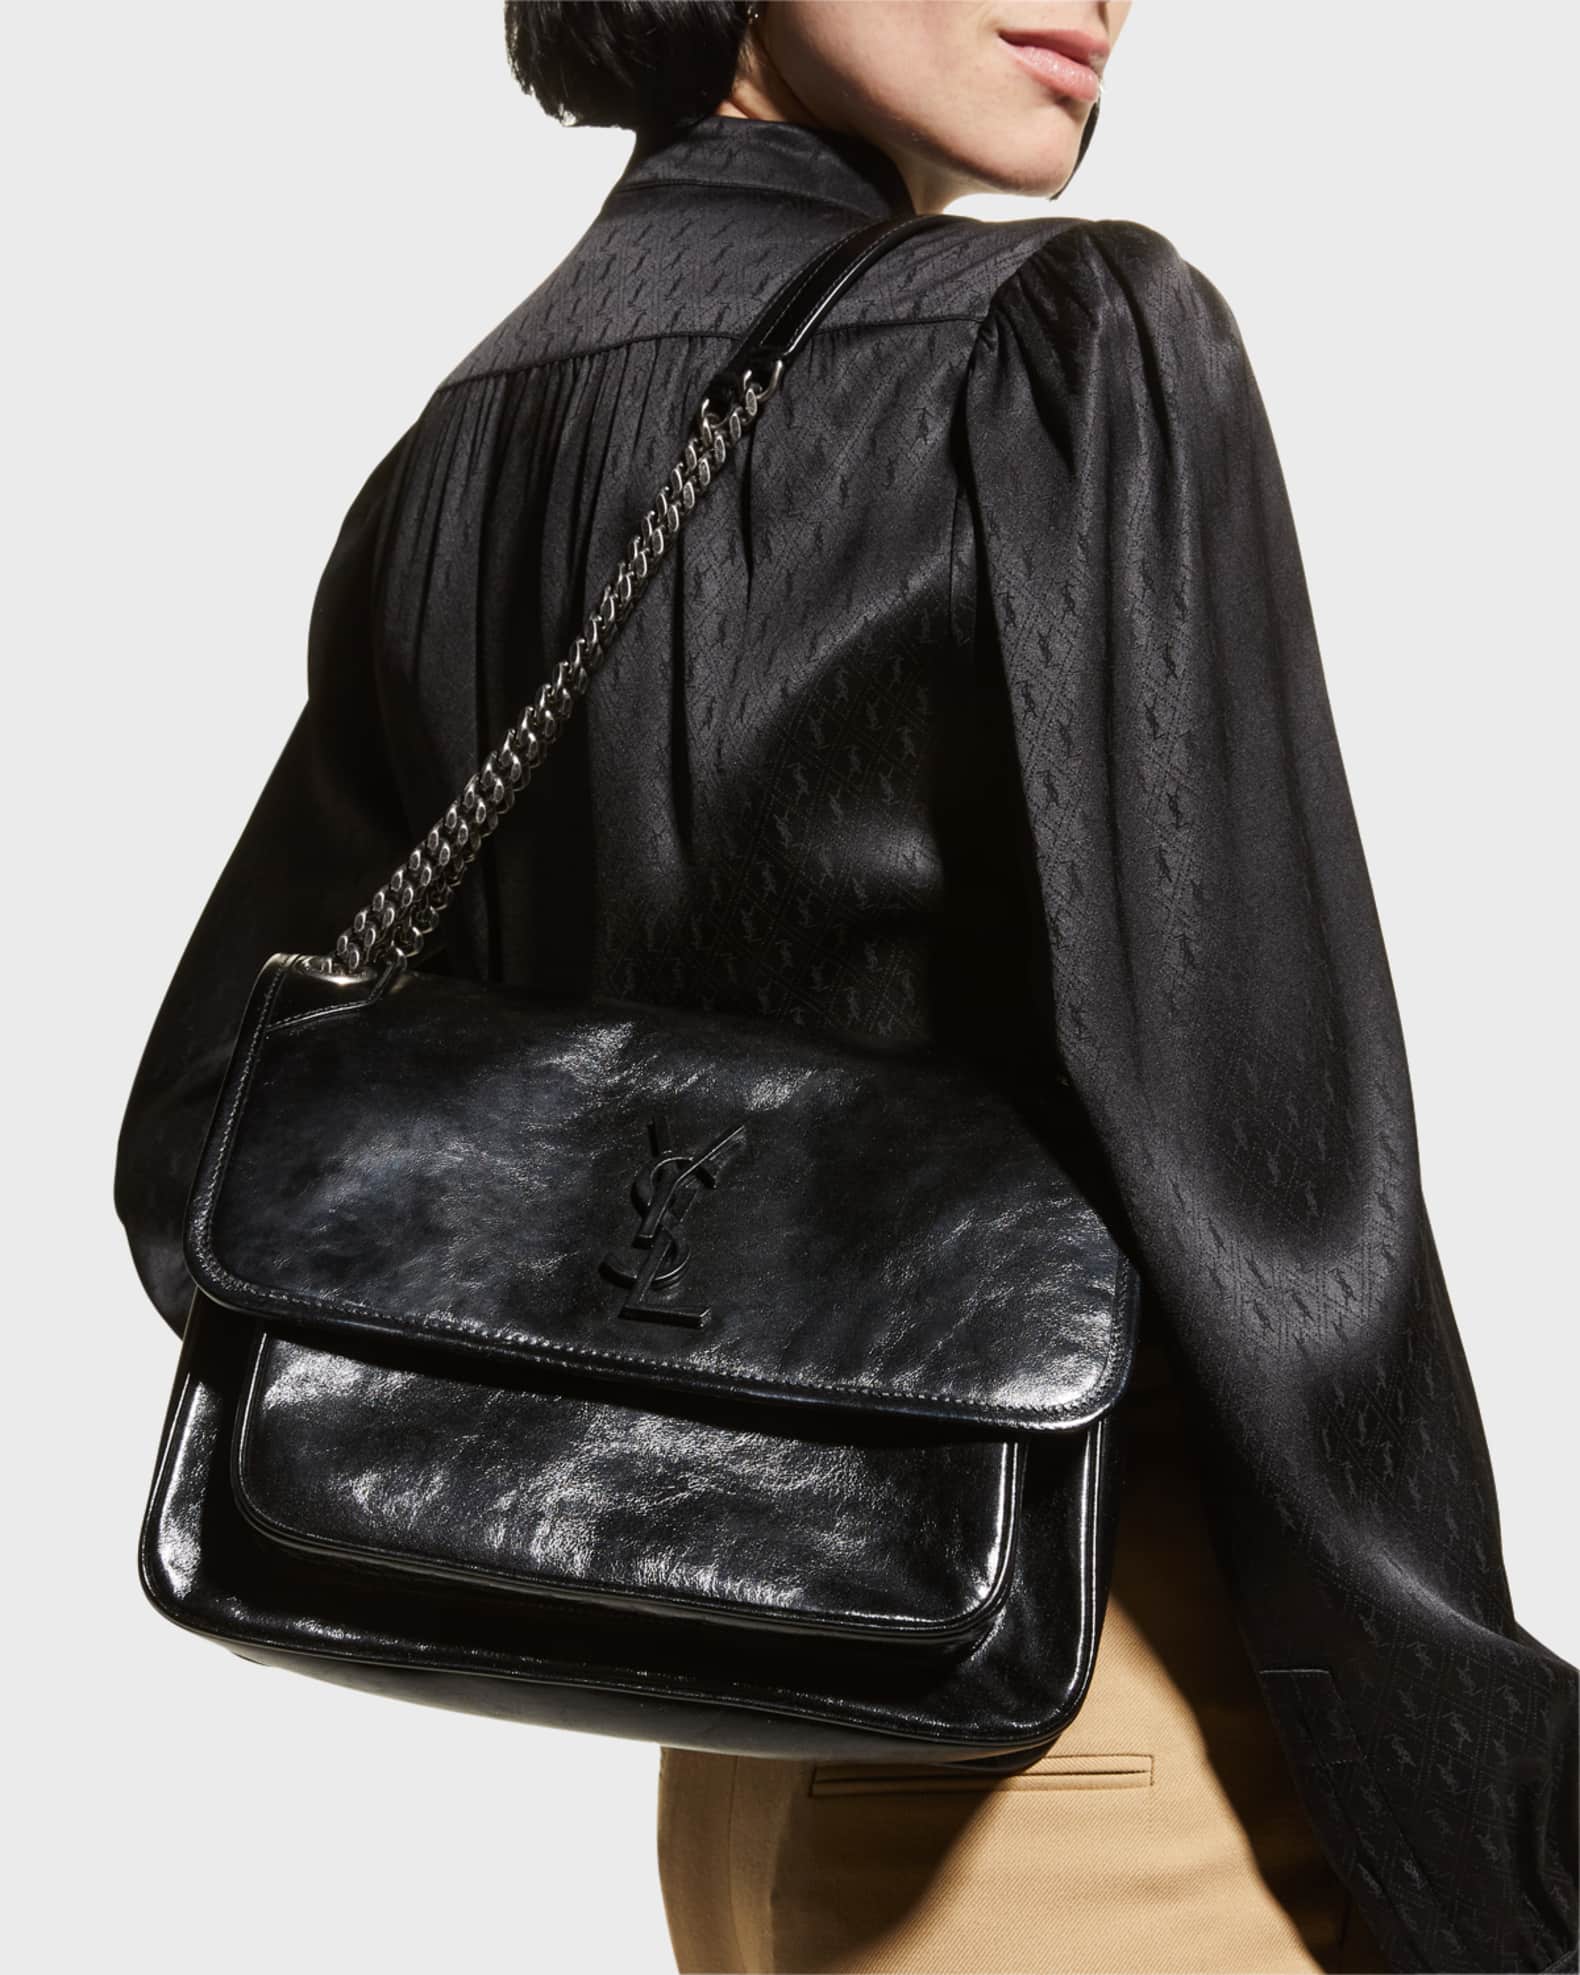 Niki Medium Leather Chain Shoulder Bag